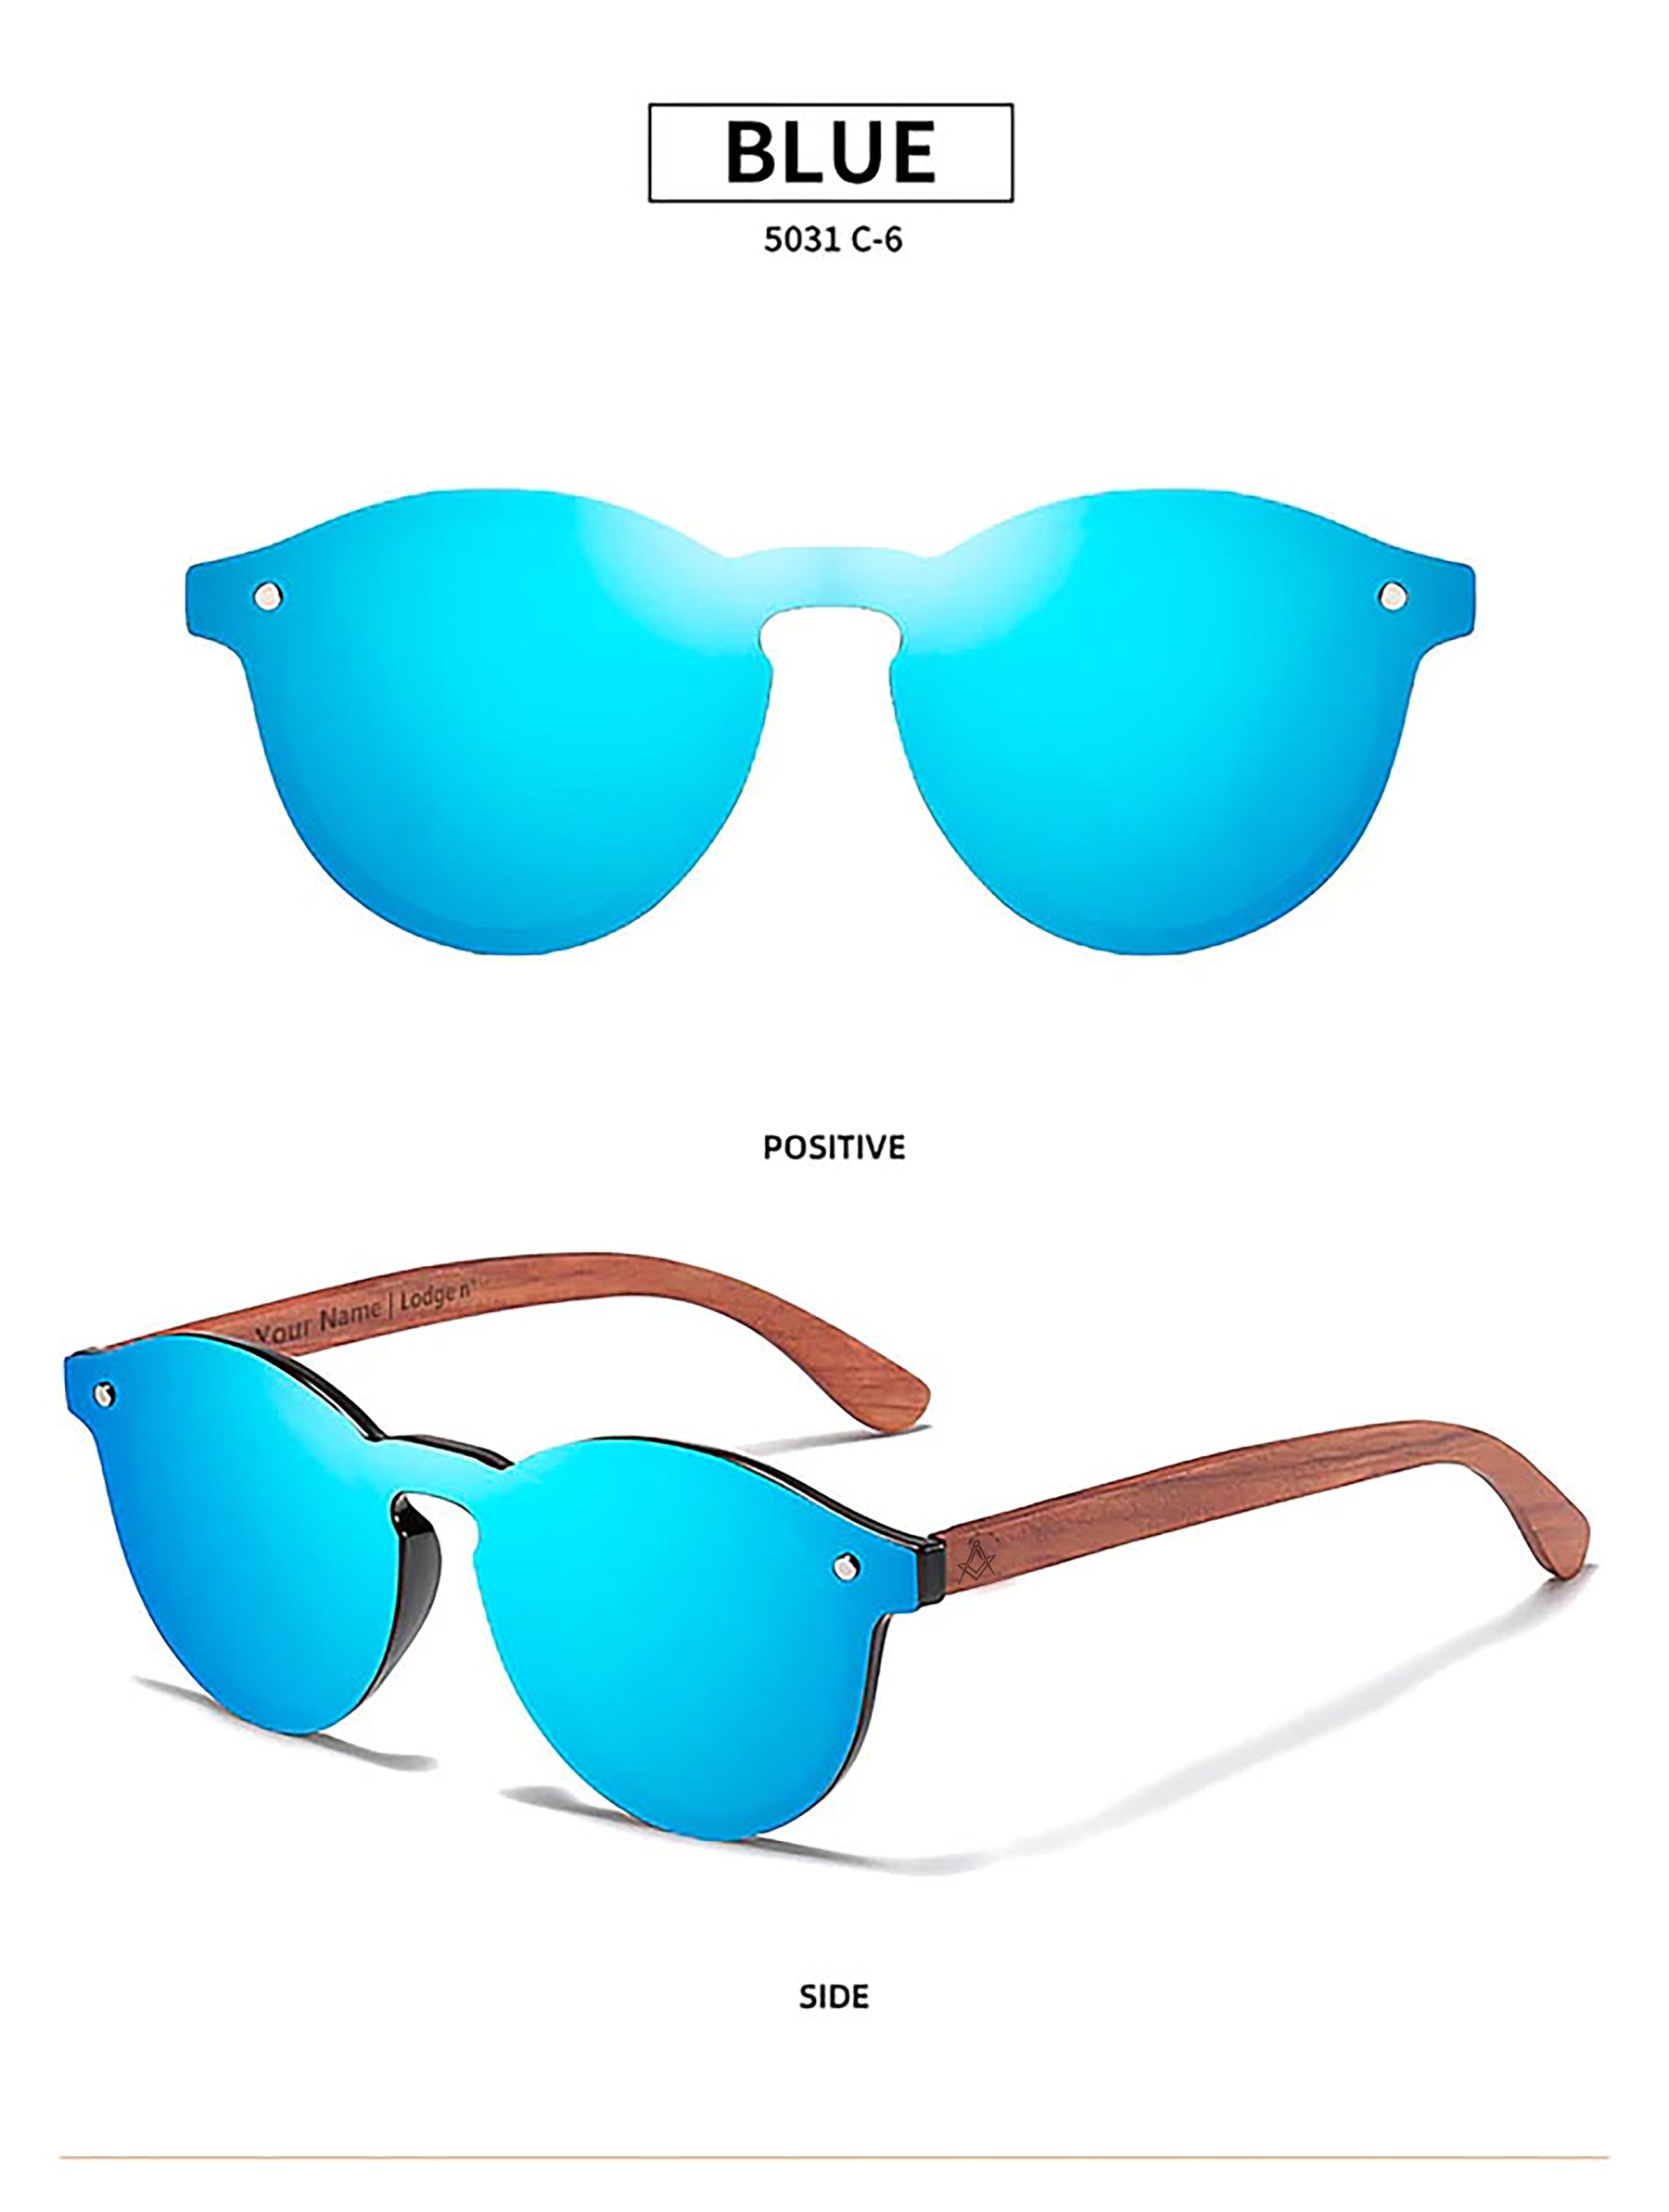 Master Mason Blue Lodge Sunglasses - Leather Case Included - Bricks Masons